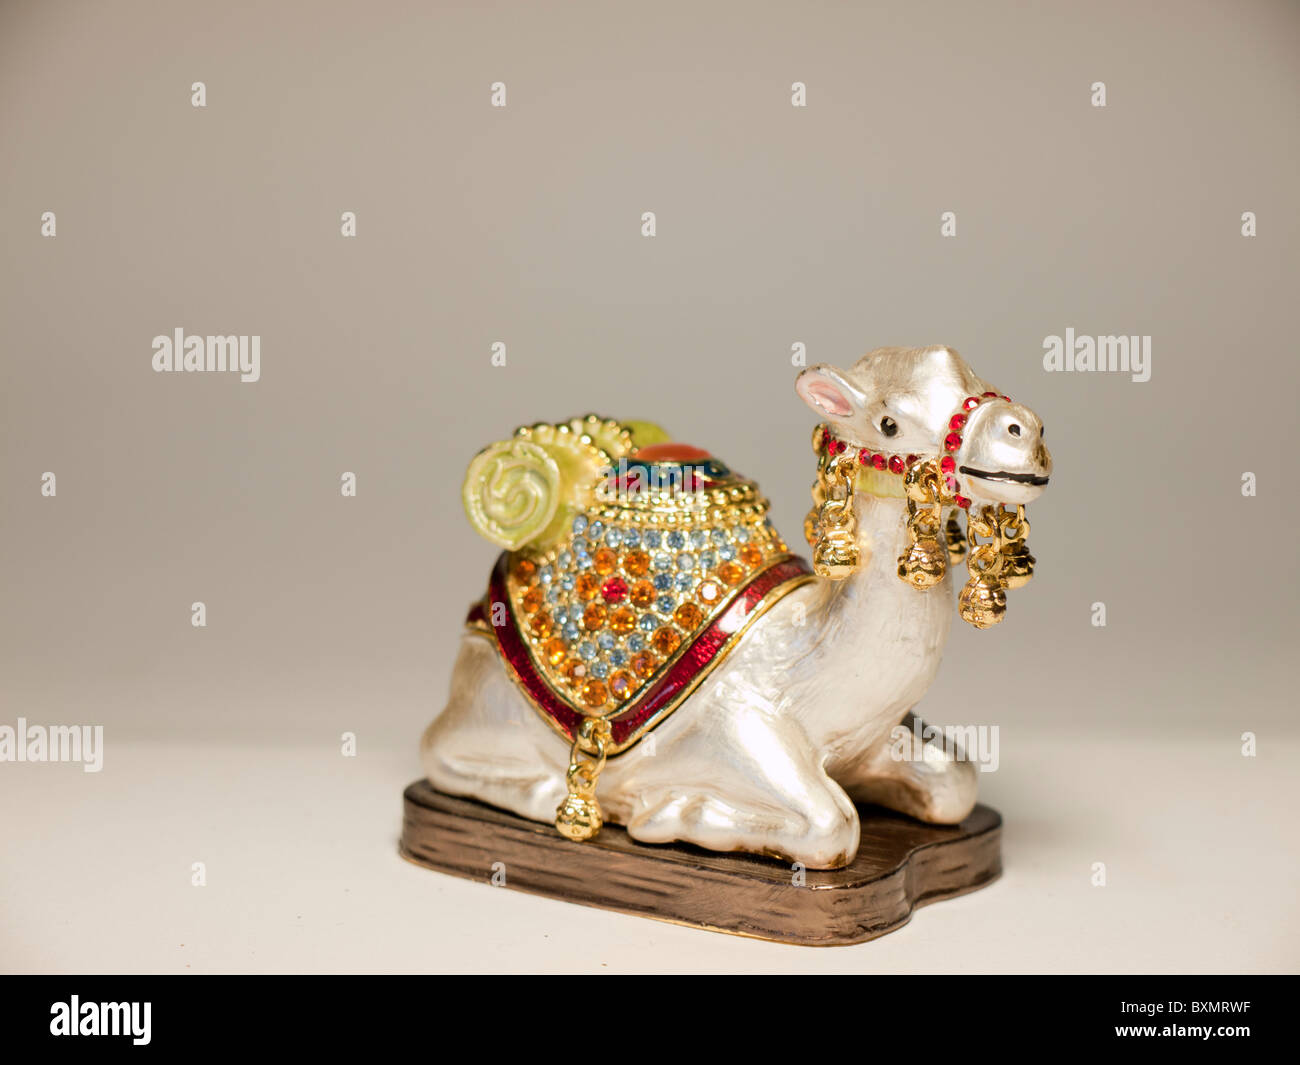 Metal camel shaped jewelry box. Stock Photo